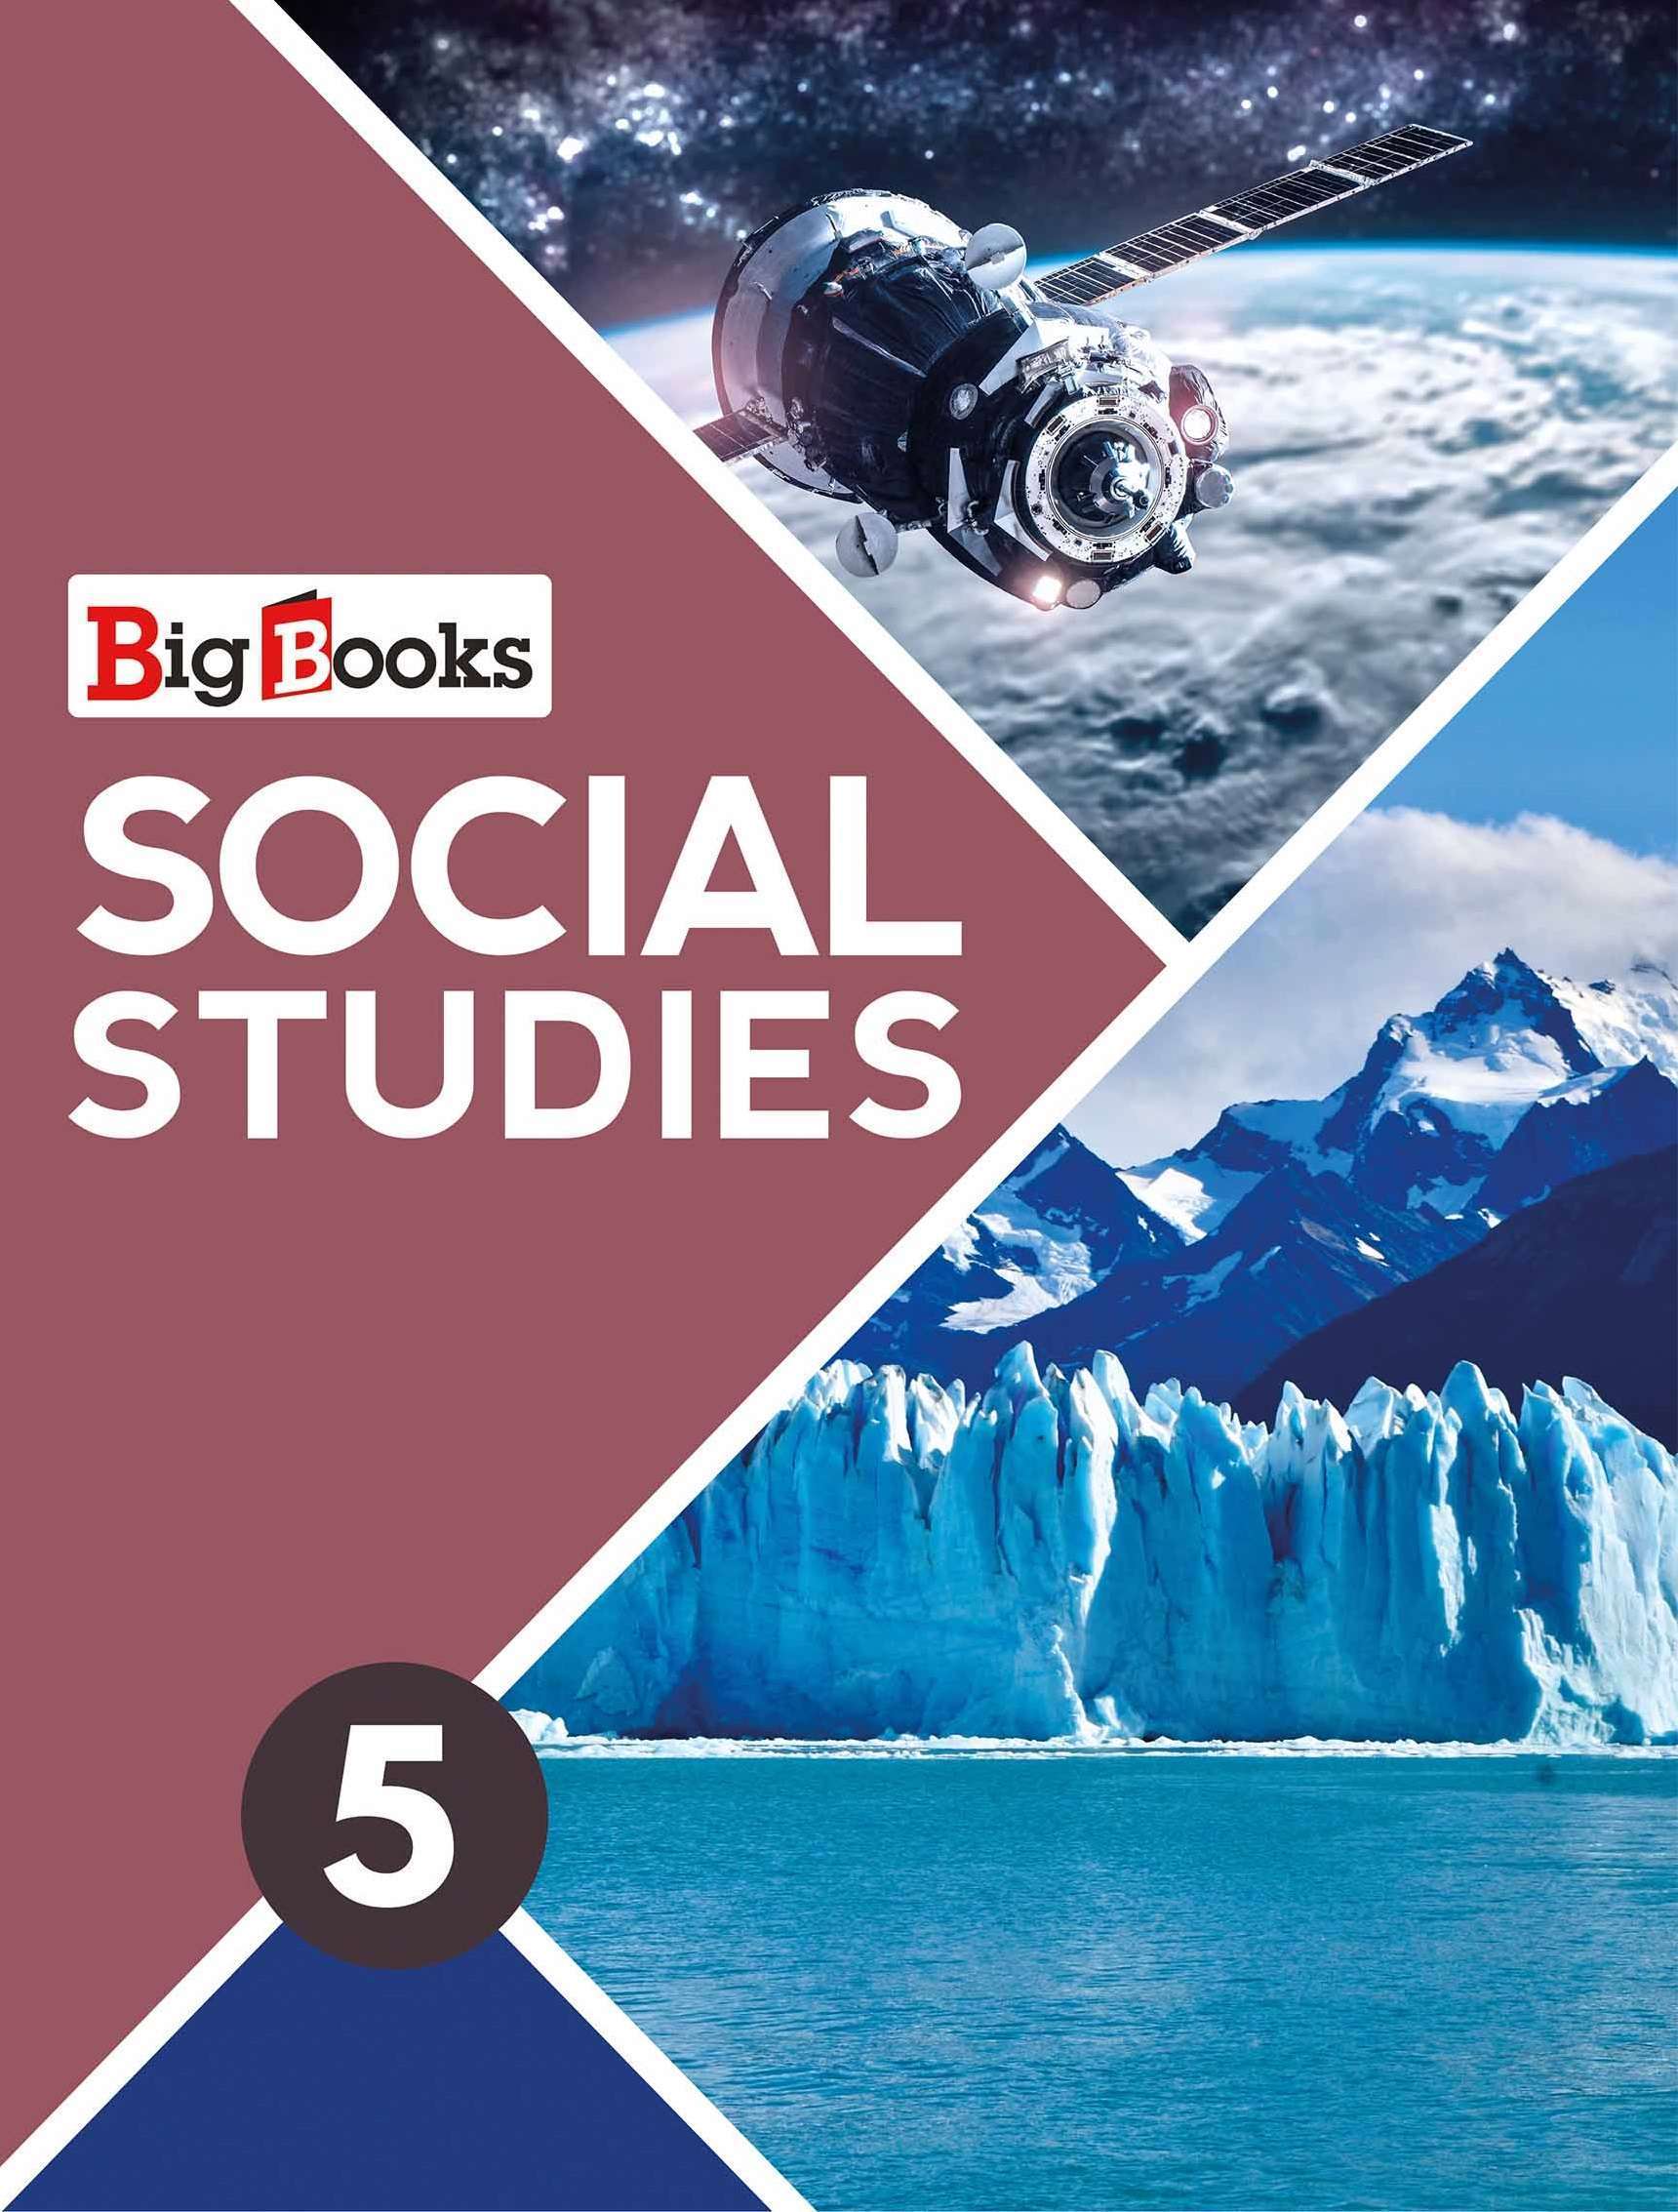 Buy Social studies book for 5 online